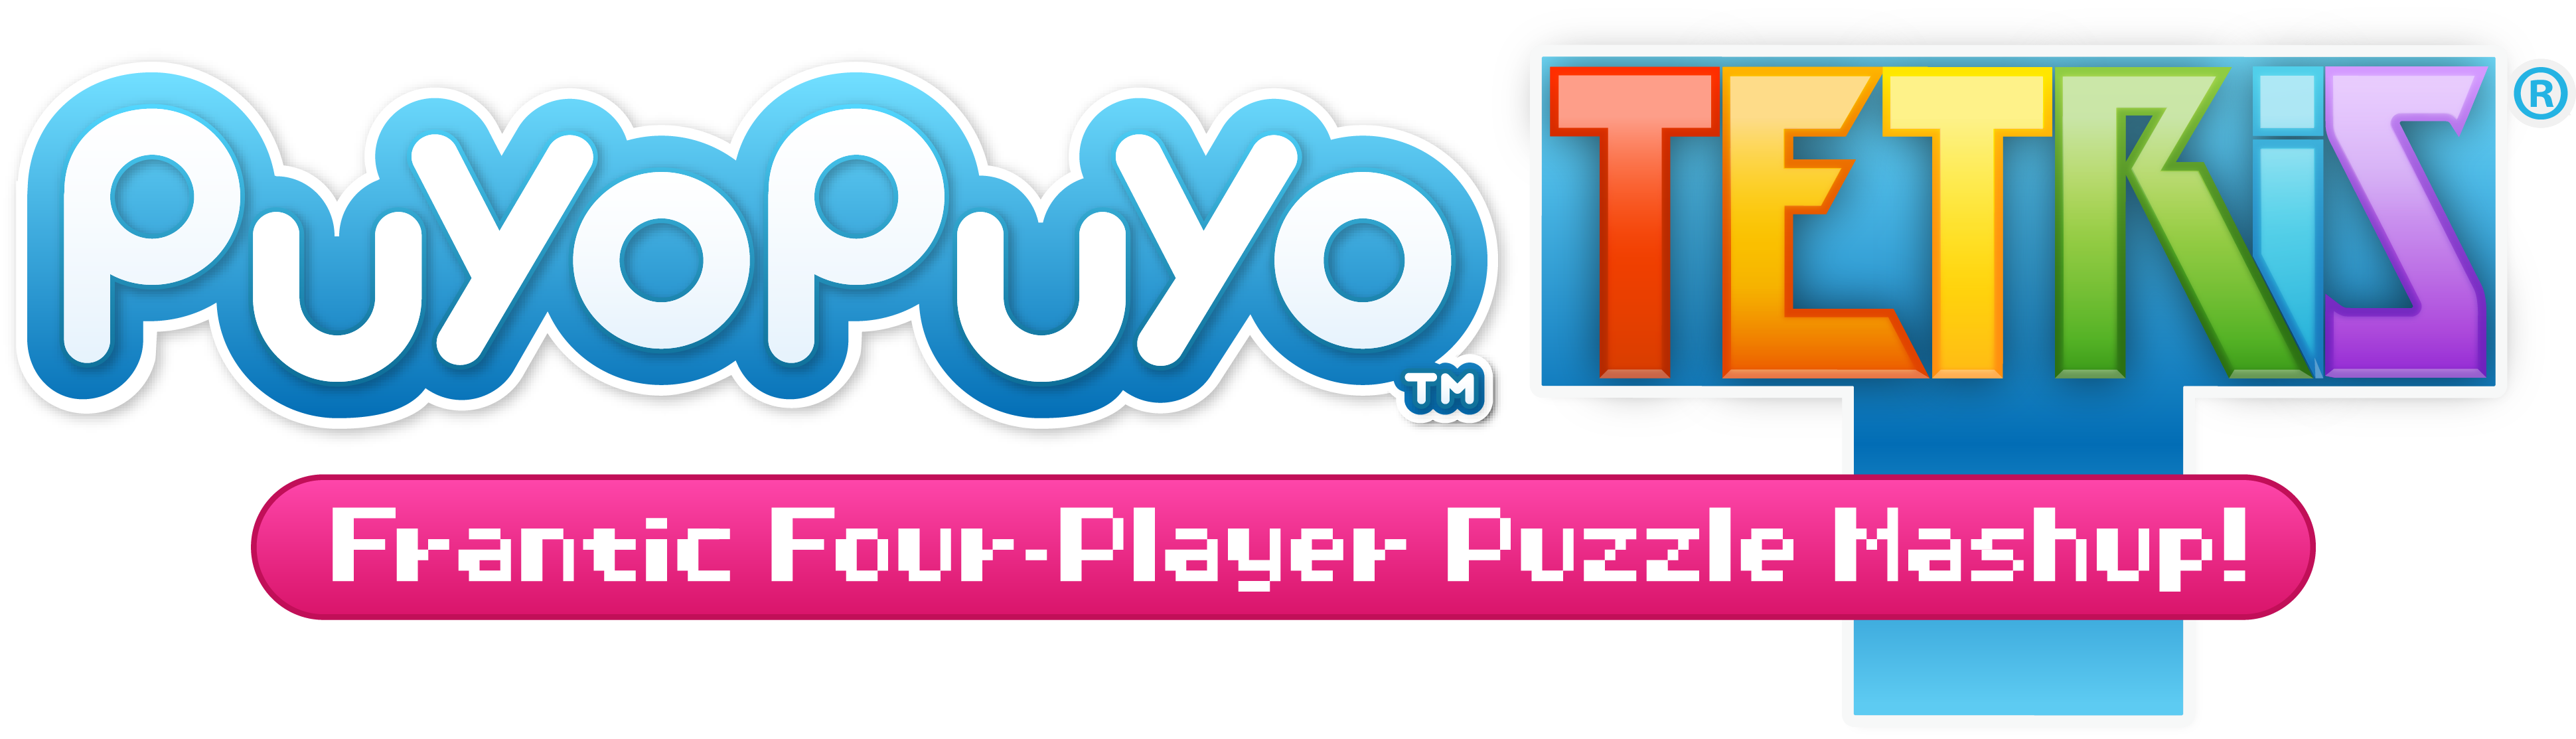 Puyo Puyo Tetris logo